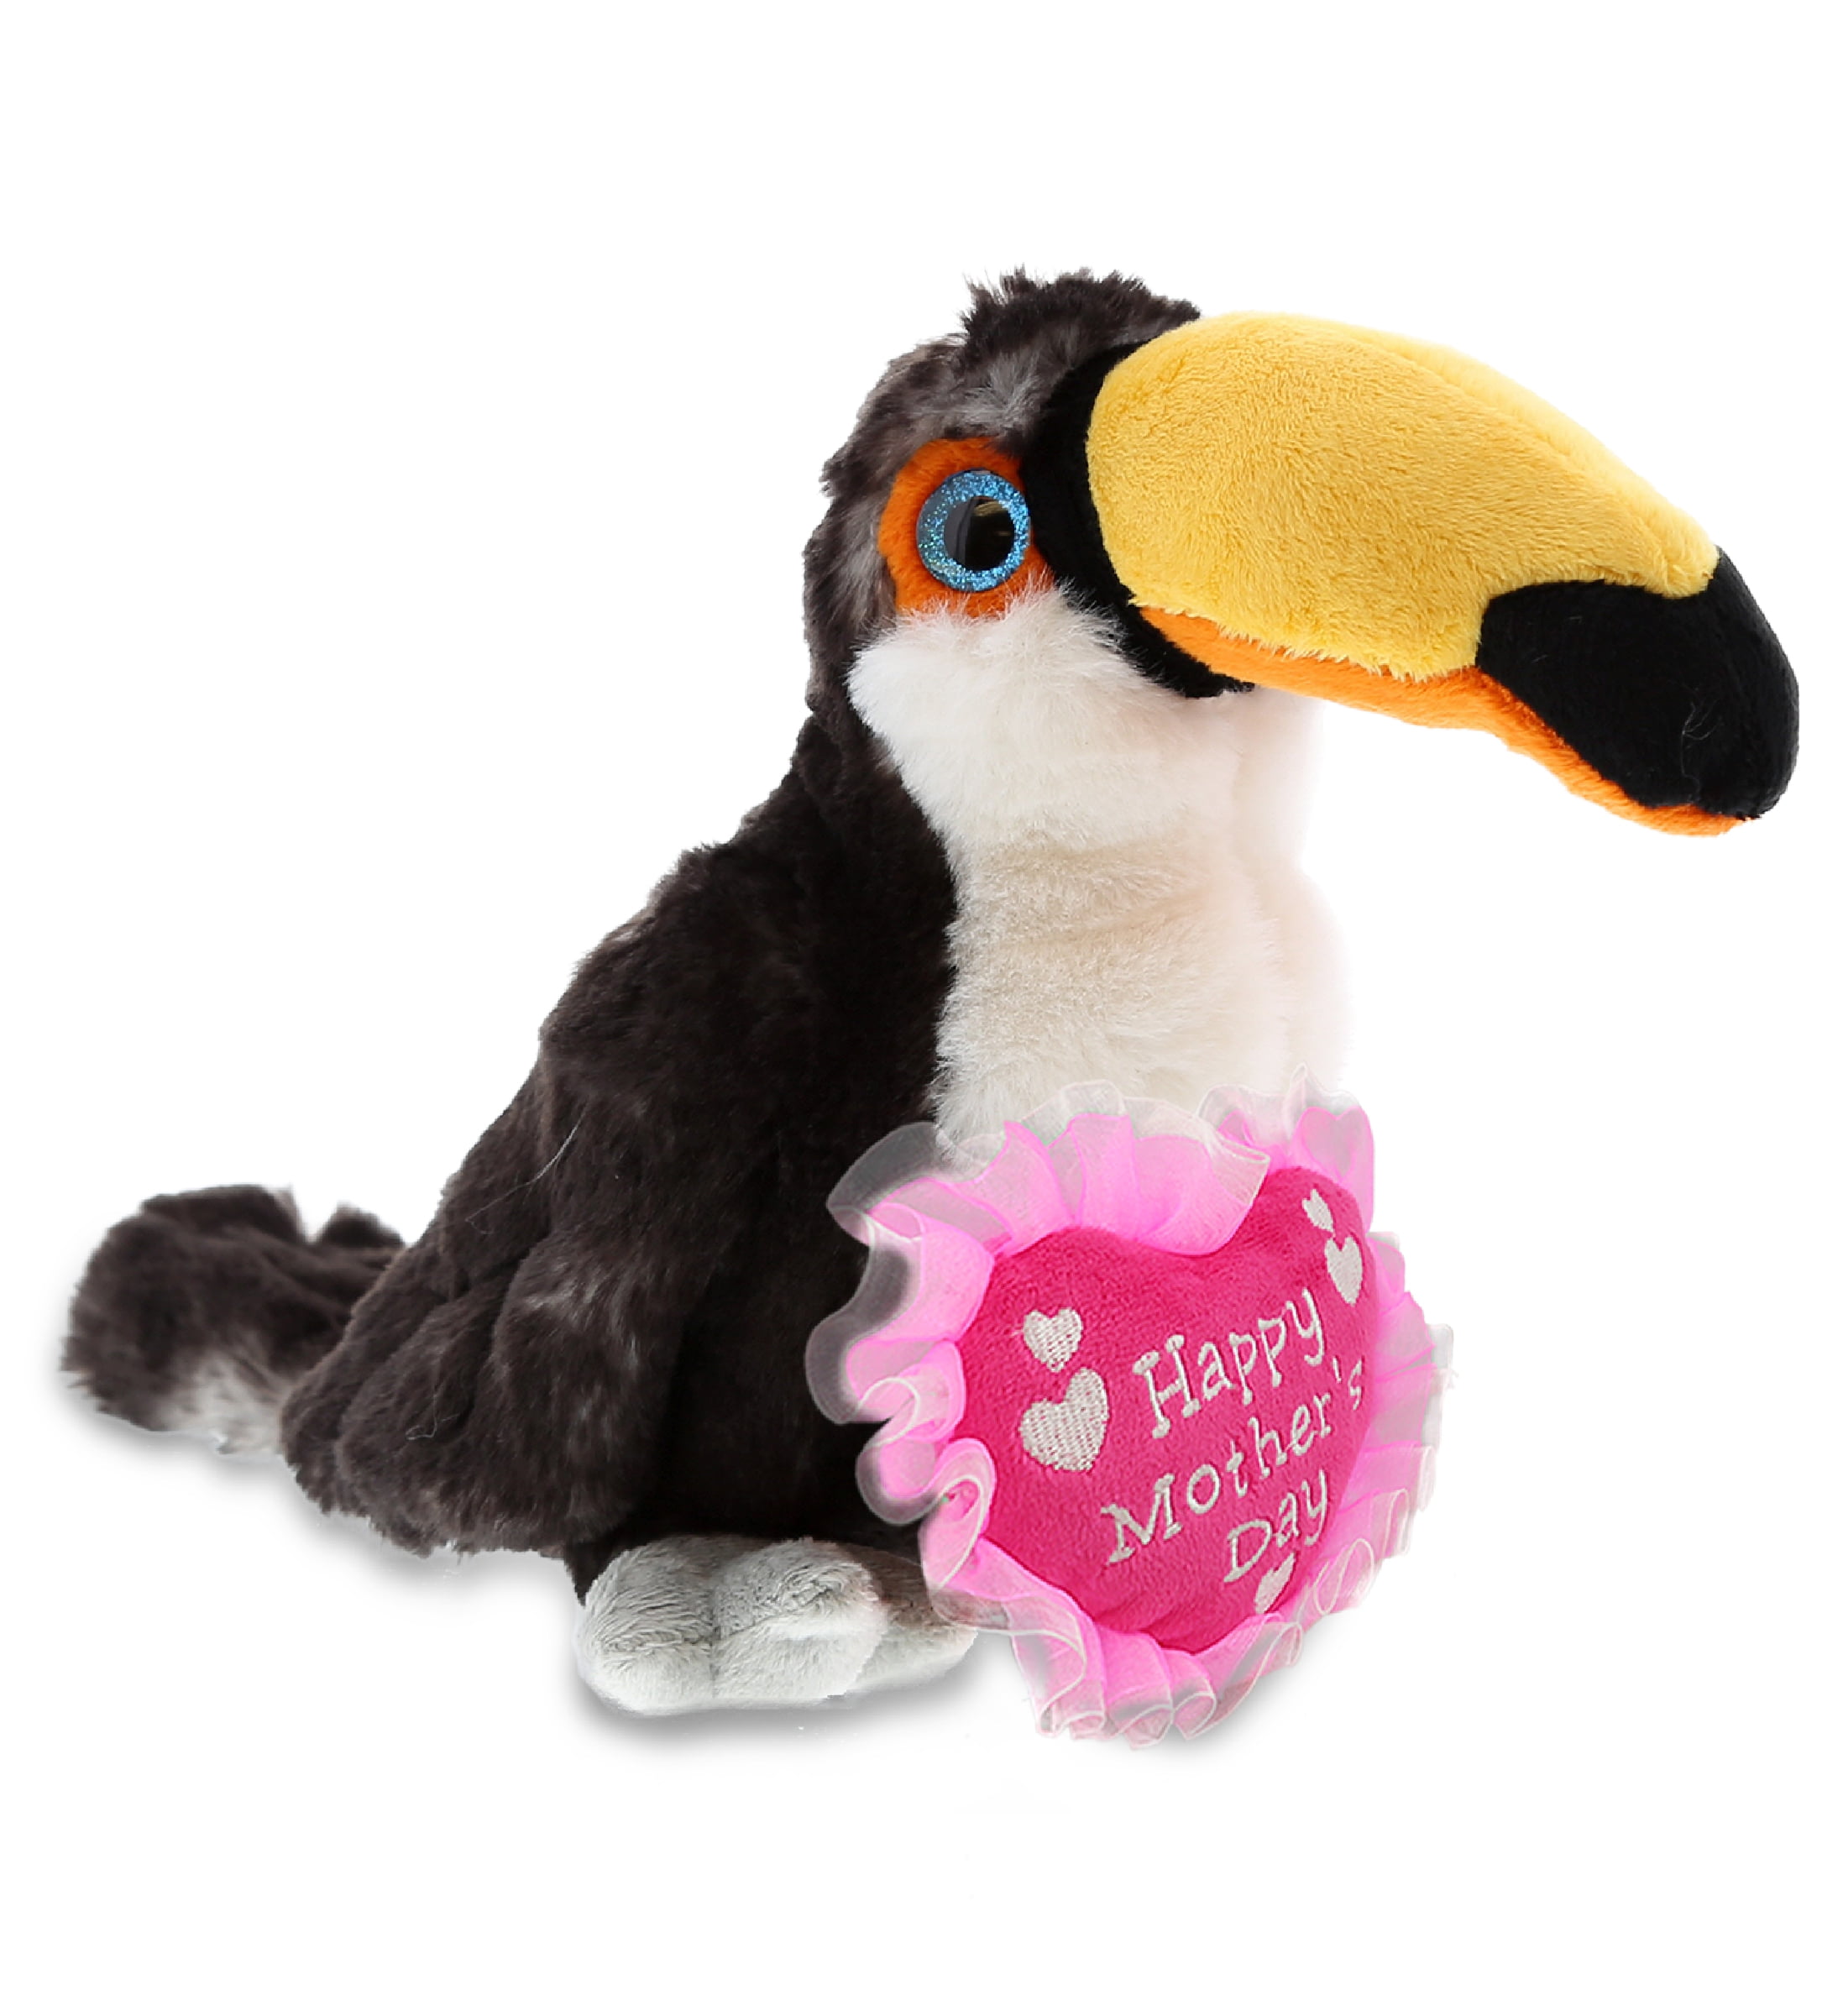 Toucan Toy Plush Stuffed Animal 